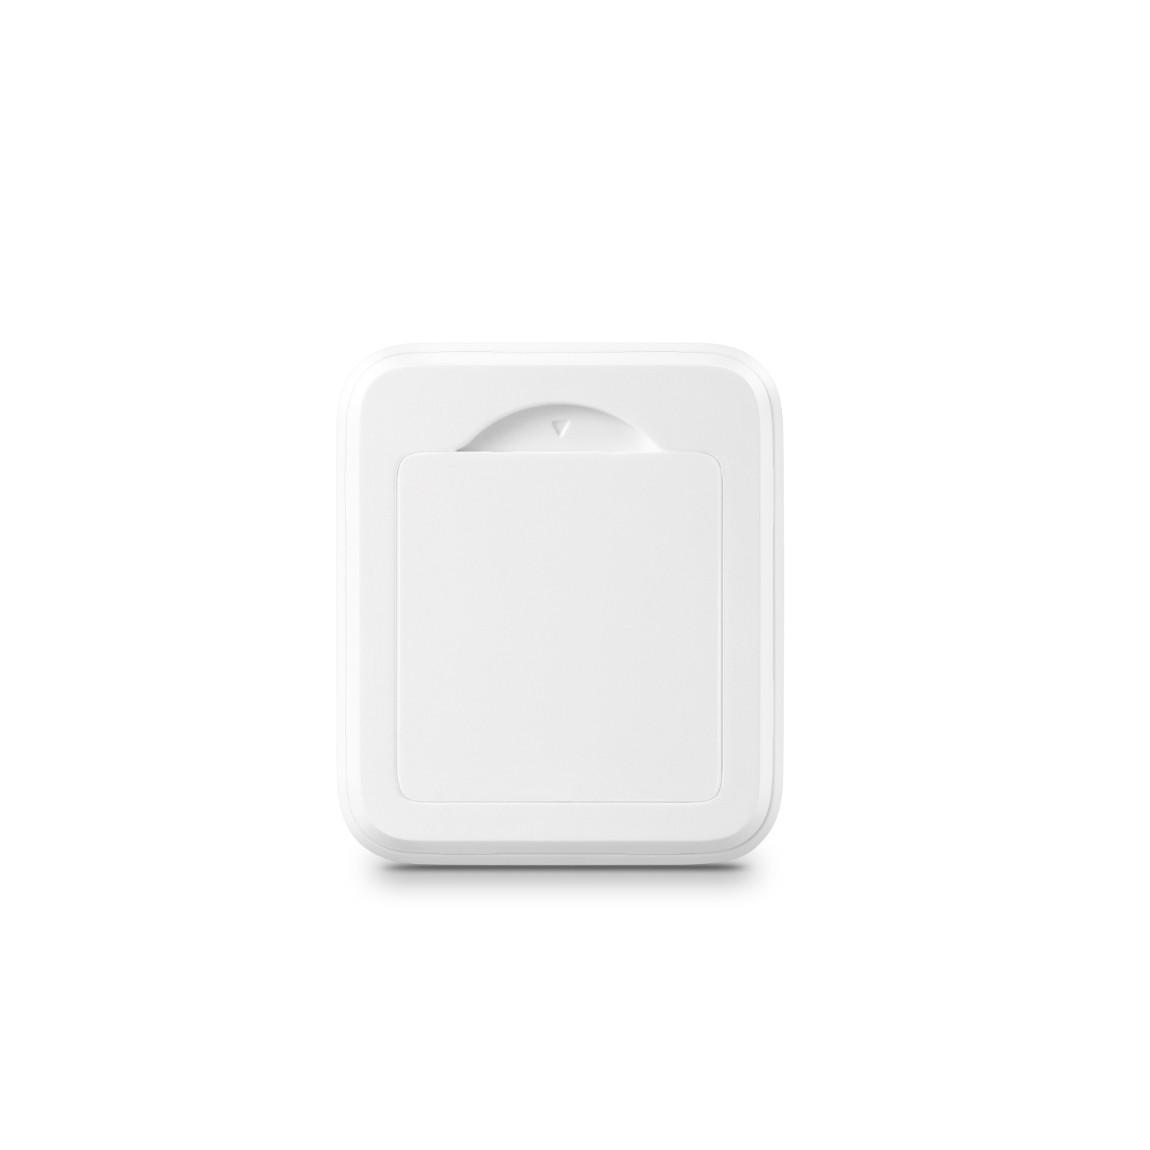 SwitchBot Remote - Smarter Button_Rueckseite